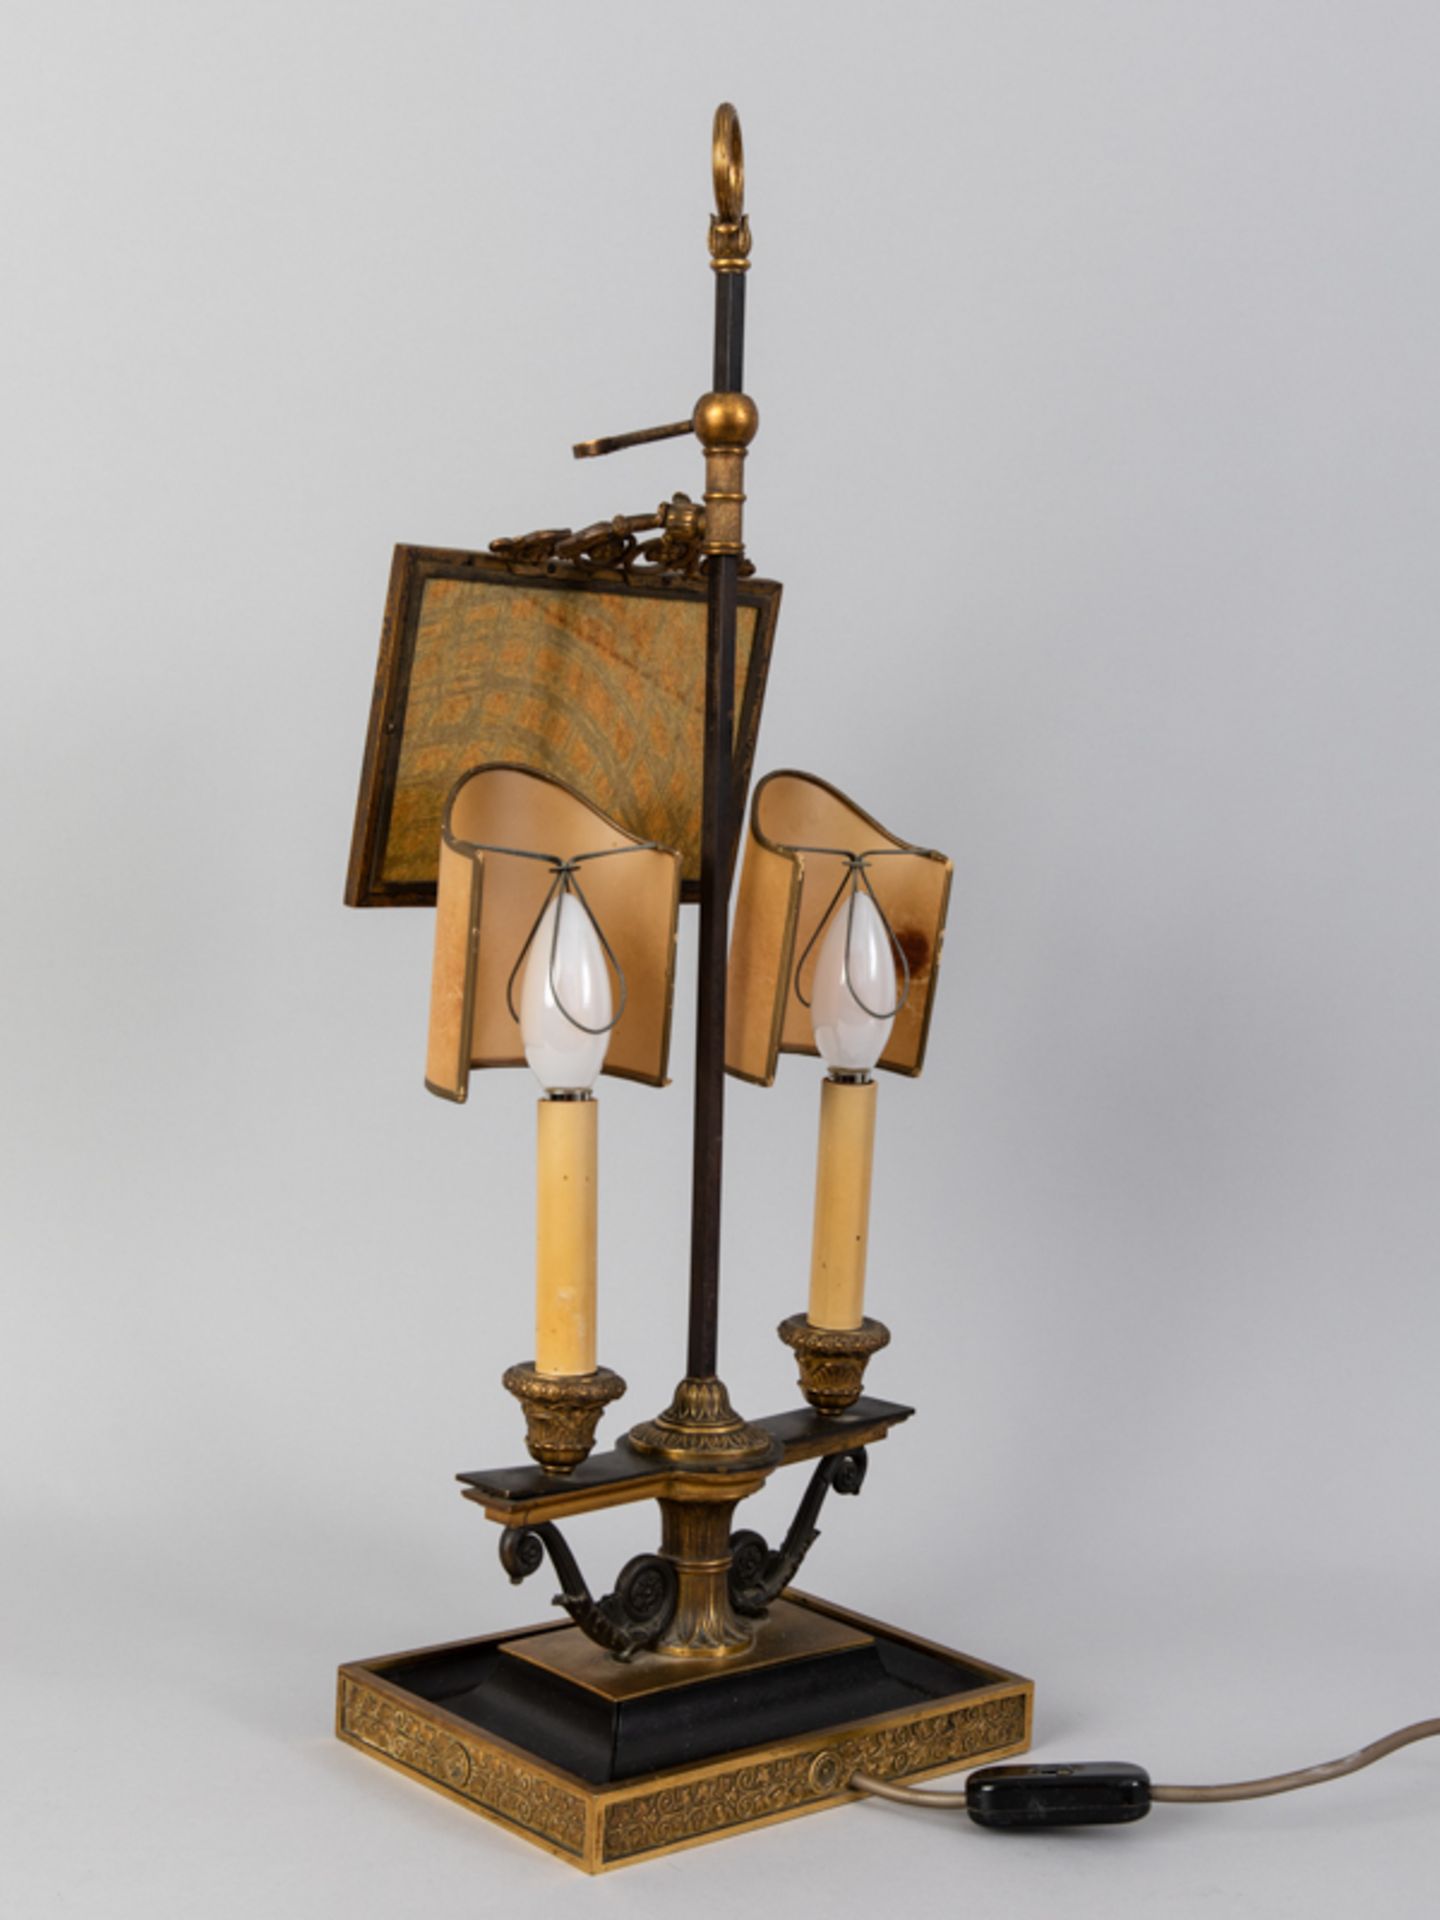 Neo-Empire-Tischlampe in Bouillotte-Art, wohl Schweden, um 1900. Bronze/Messing, teils brüniert - Image 3 of 5